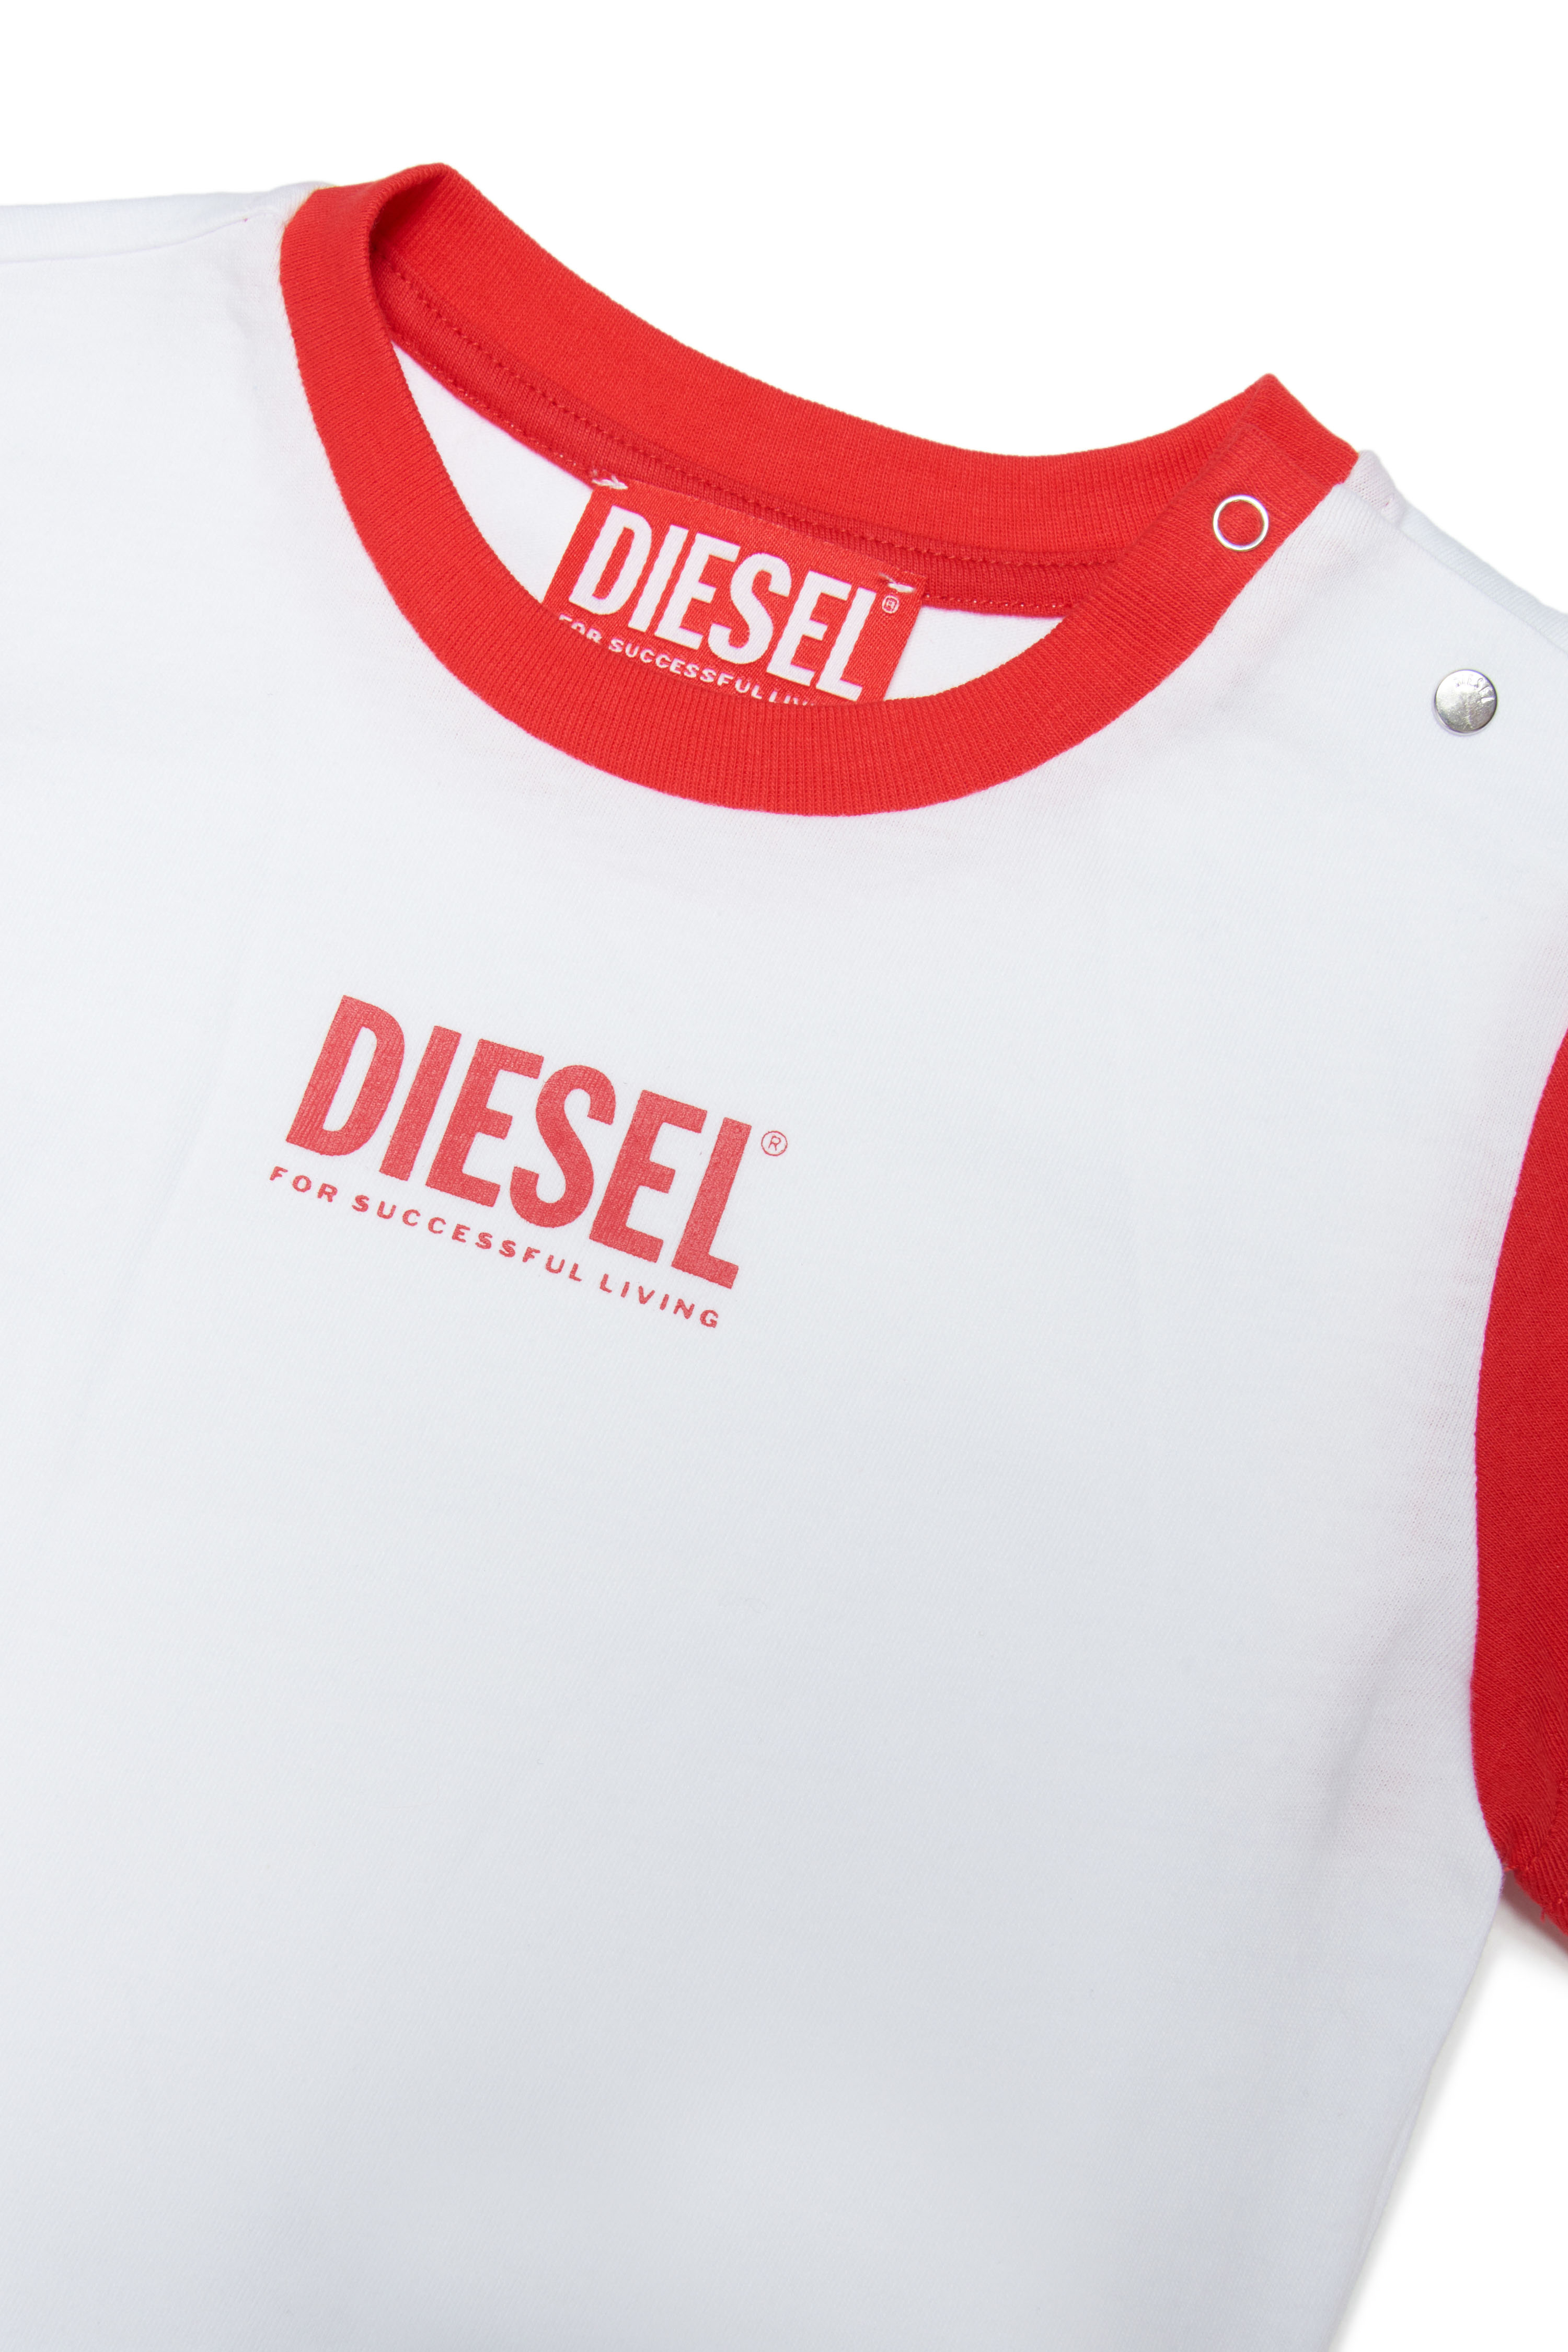 Diesel - MTANTEB, Weiss/Rot - Image 3